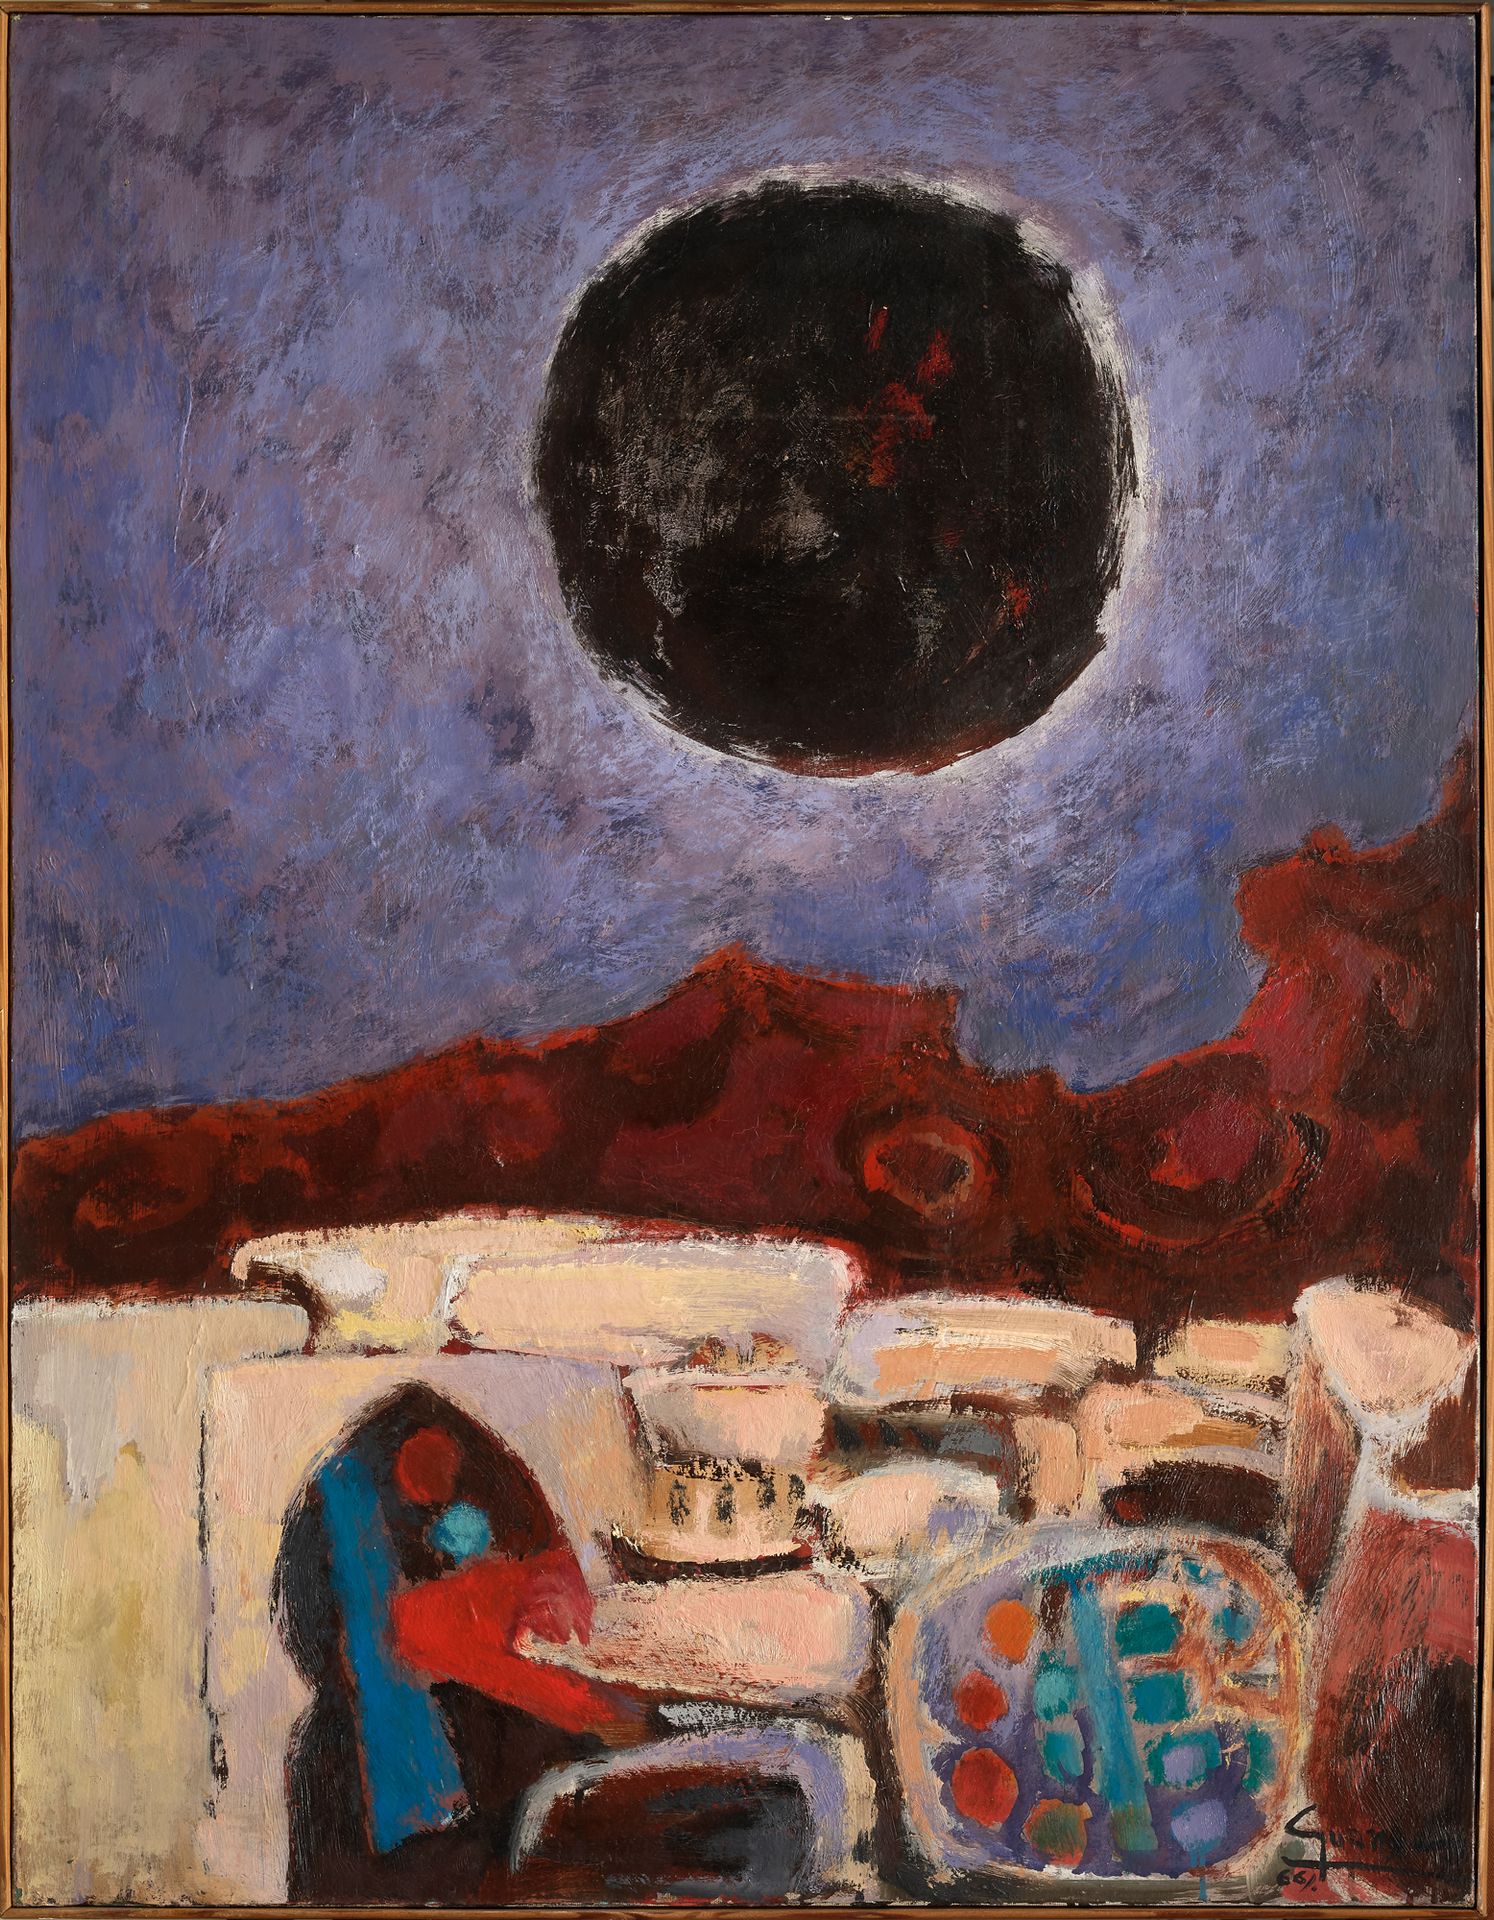 Antonio GUANSÉ (1926-2008) 
Morocco
Oil on canvas, signed lower right, countersi&hellip;